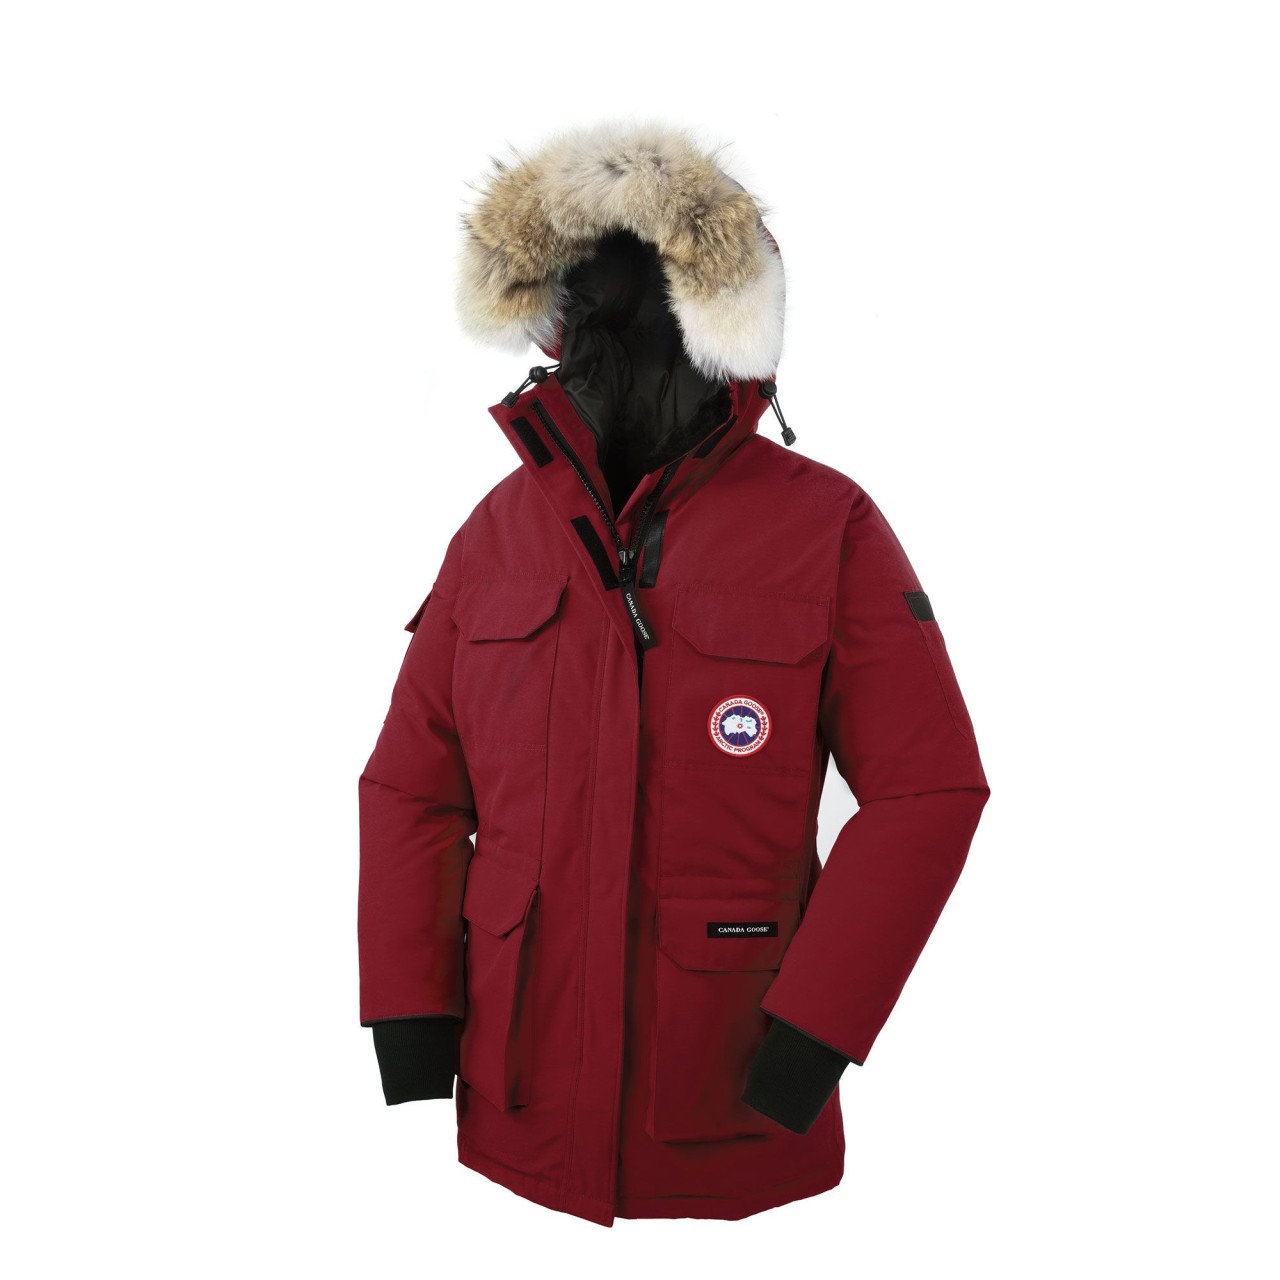 Canada Goose parka online fake - canada goose jacket sale | canada goose jackets outlet store